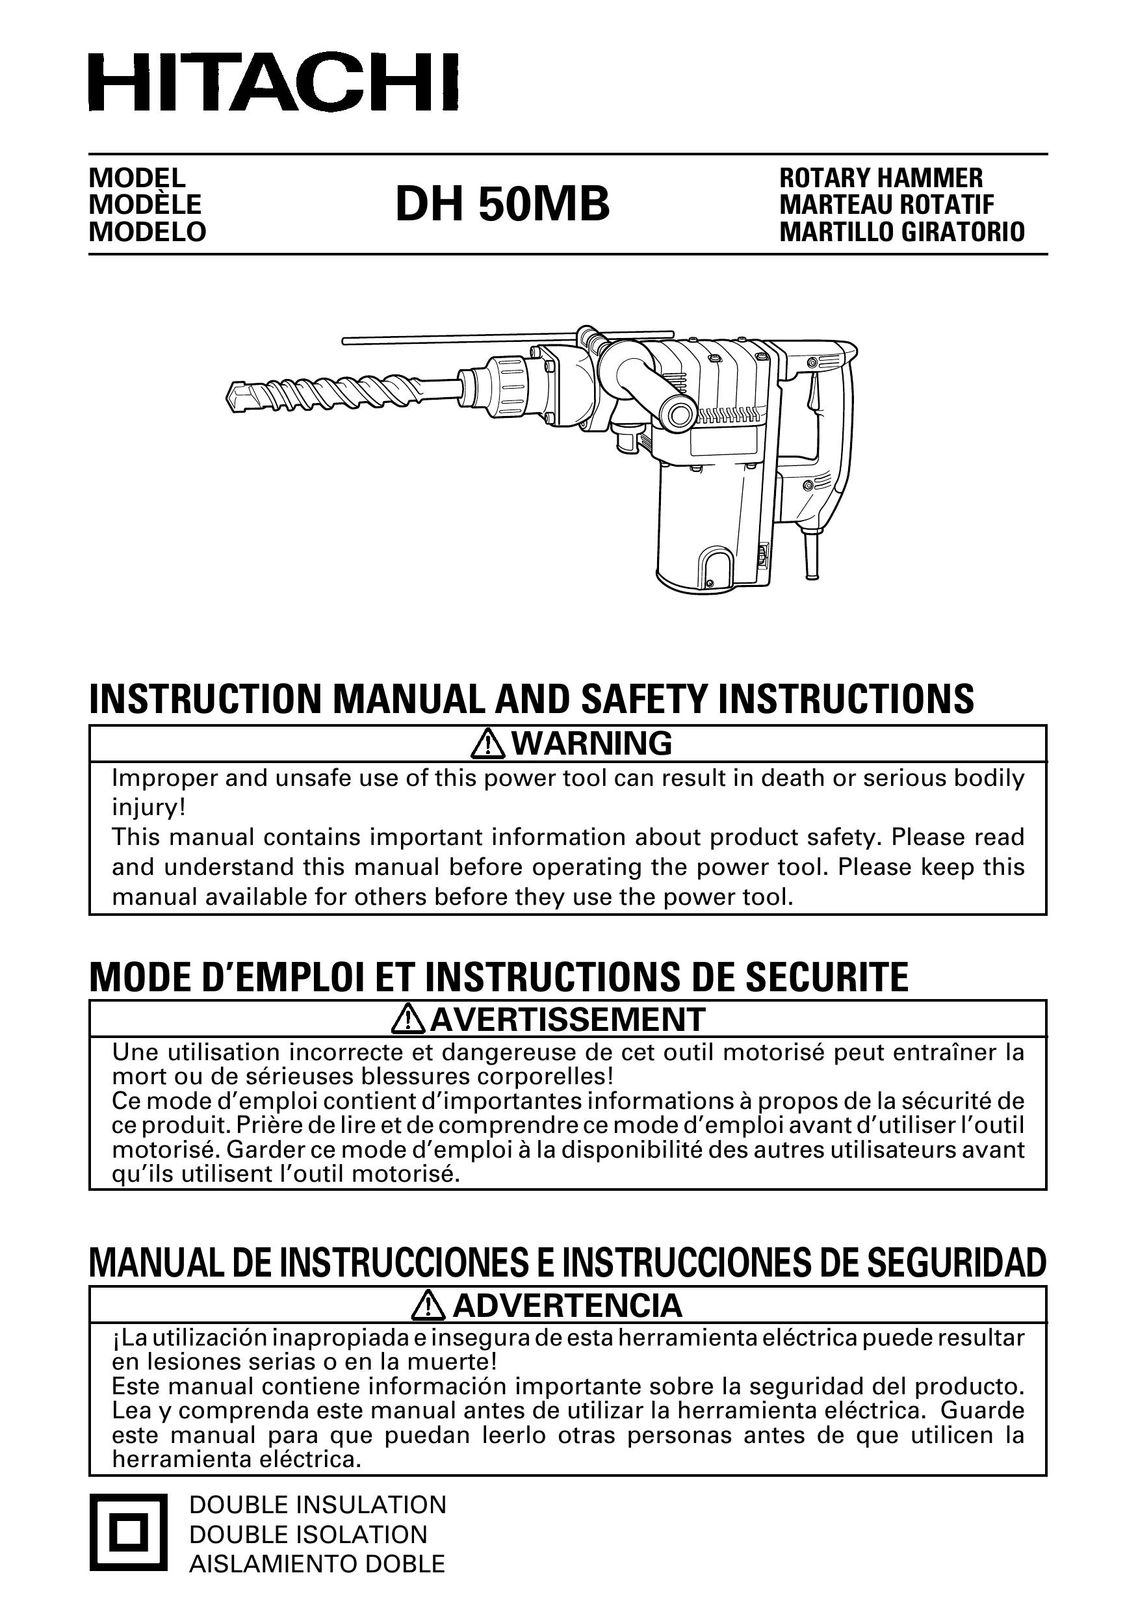 Hitachi DH 50MB Power Hammer User Manual